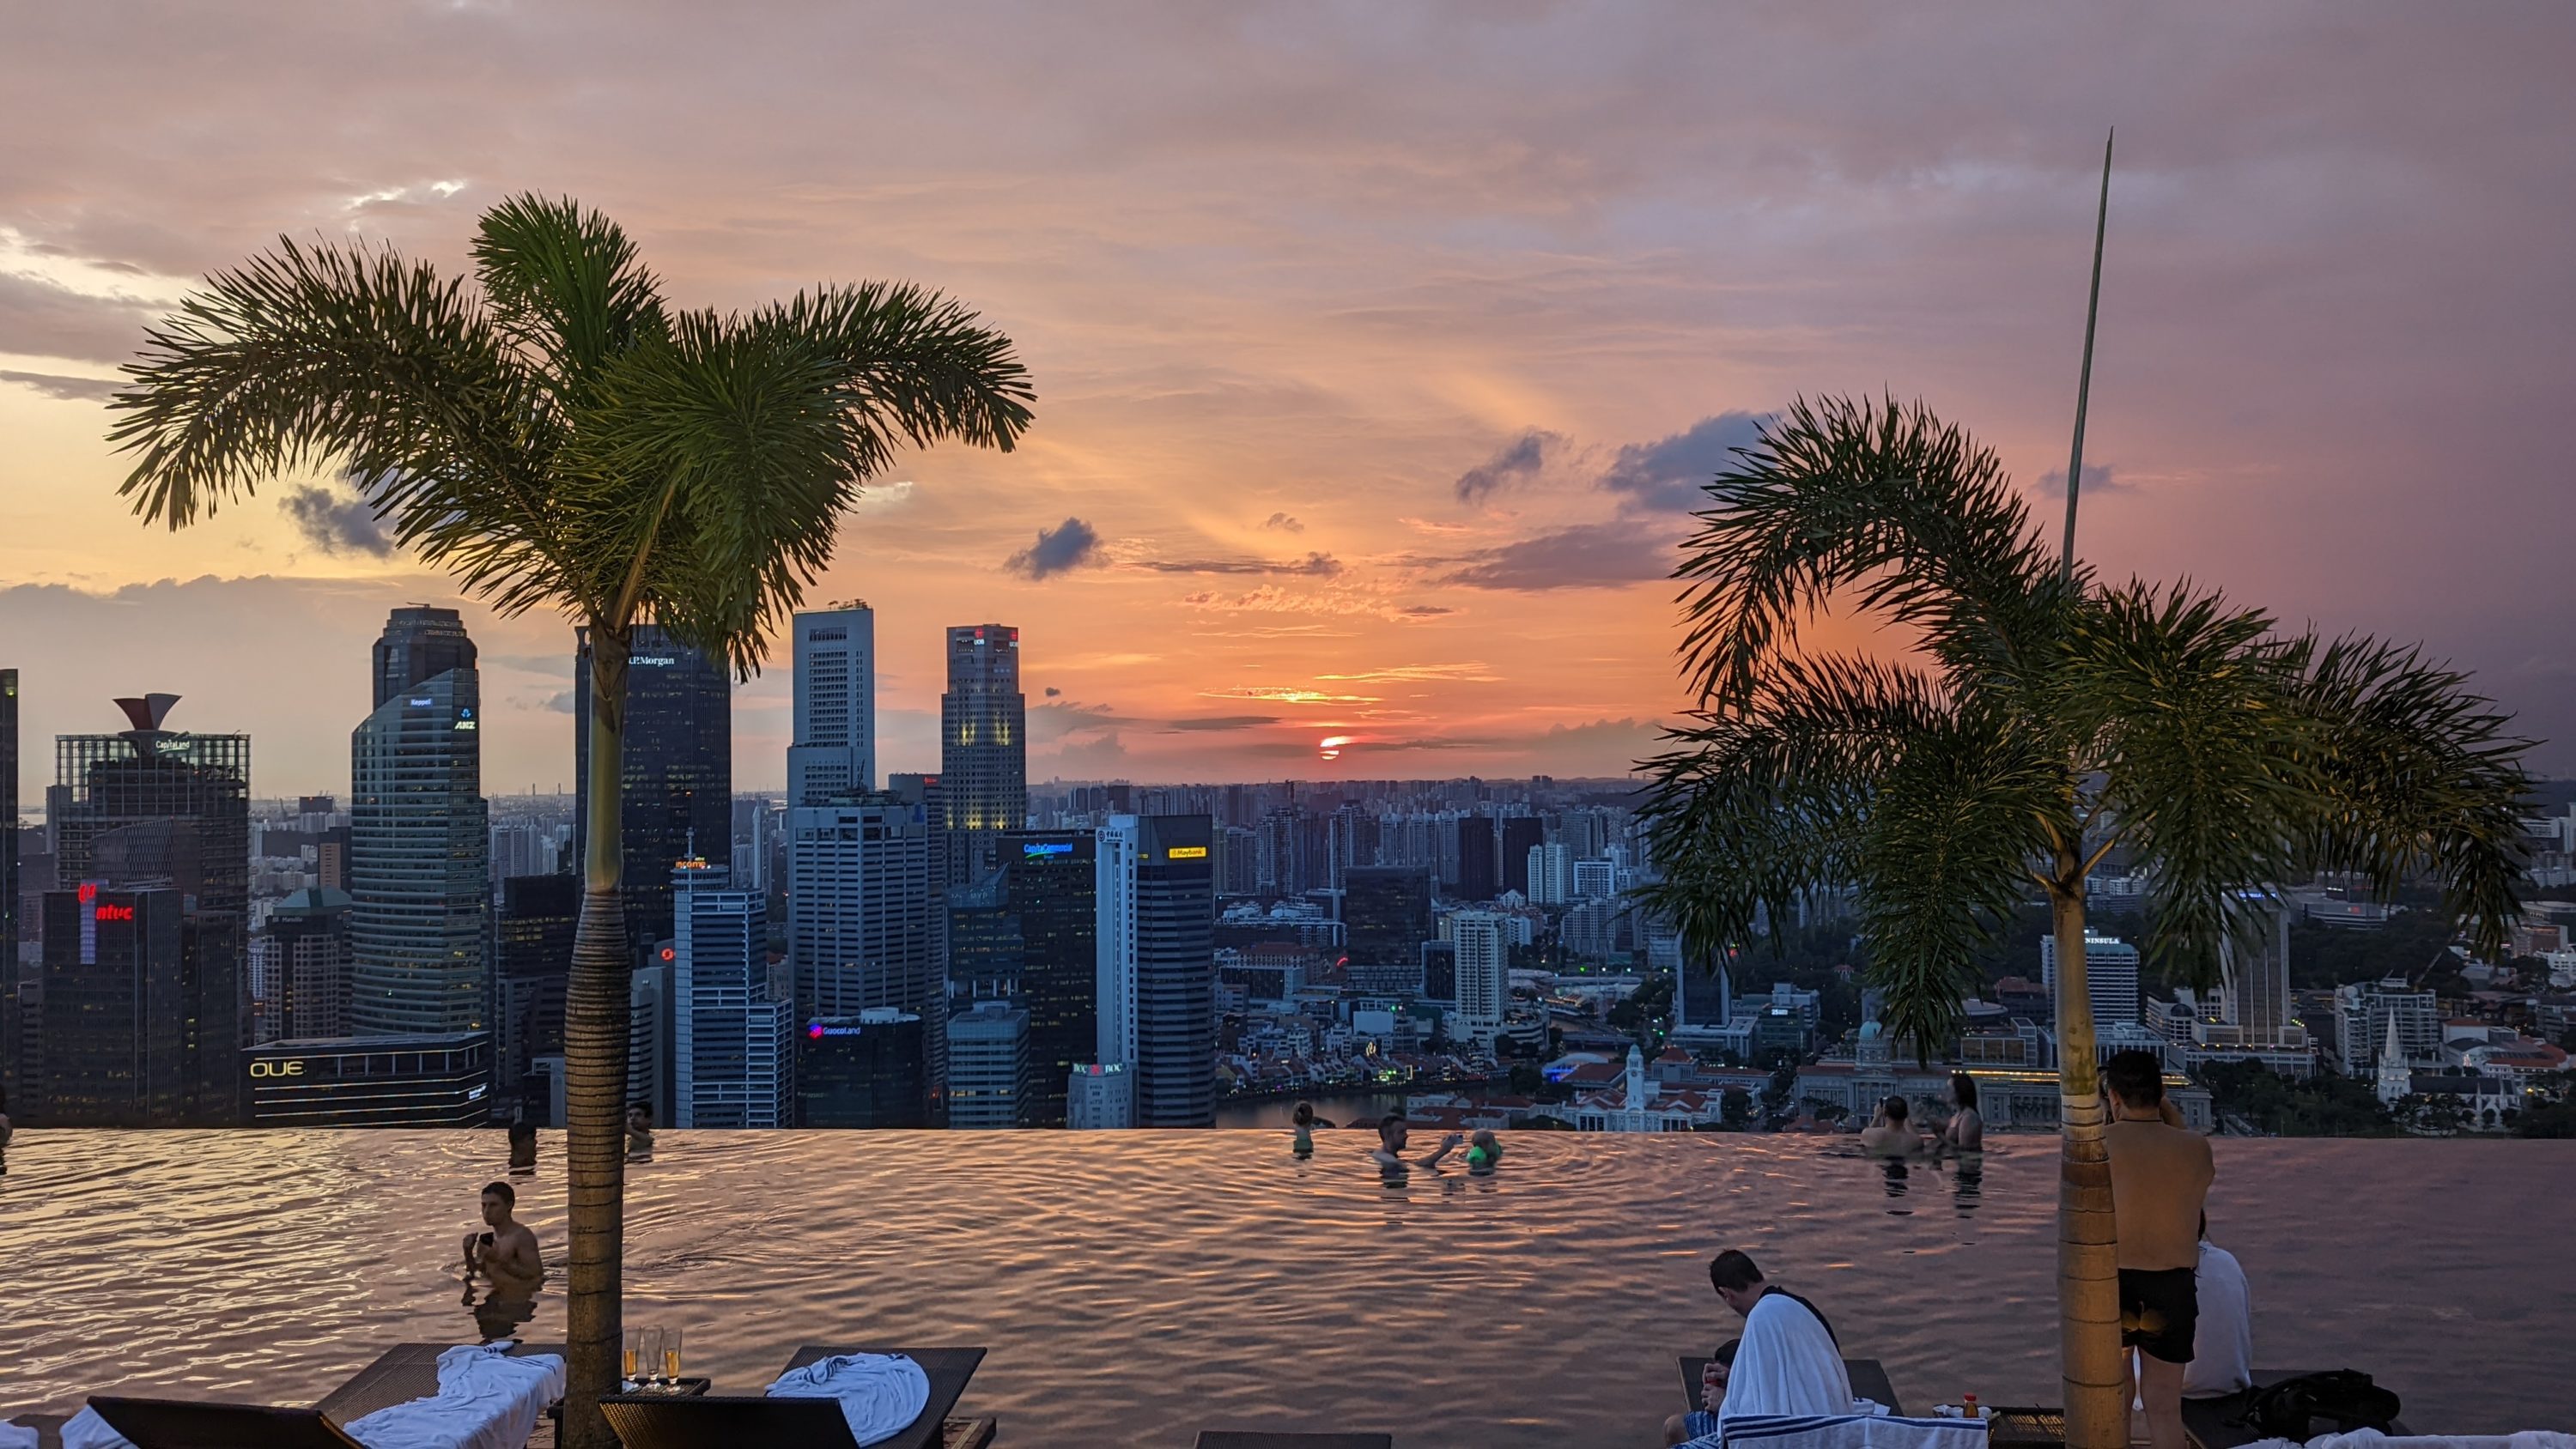 Sunset over Singapore